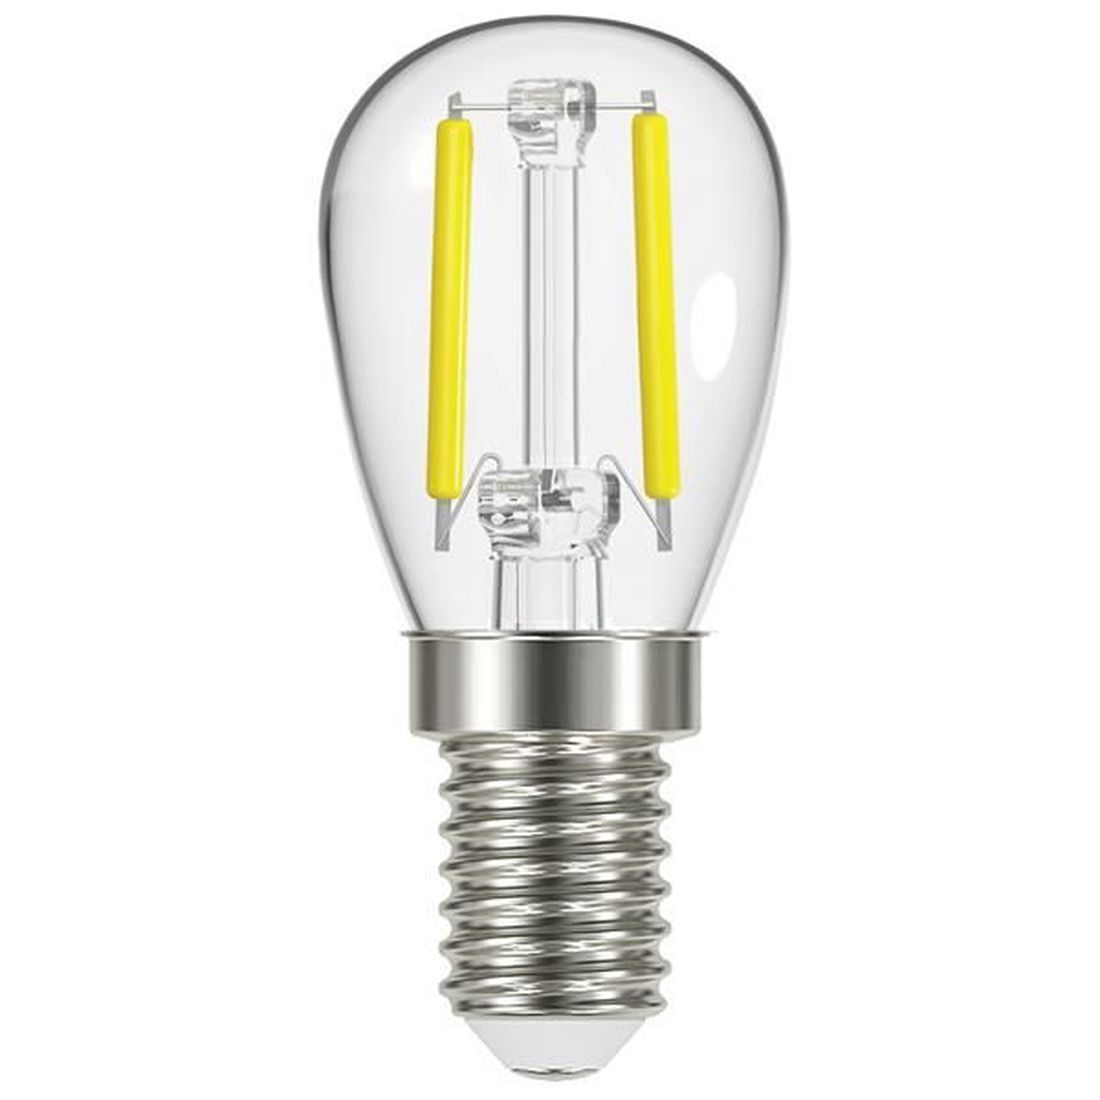 Energizer LED SES (E14) Pygmy Filament Bulb, Warm White 240 lm 2W                         